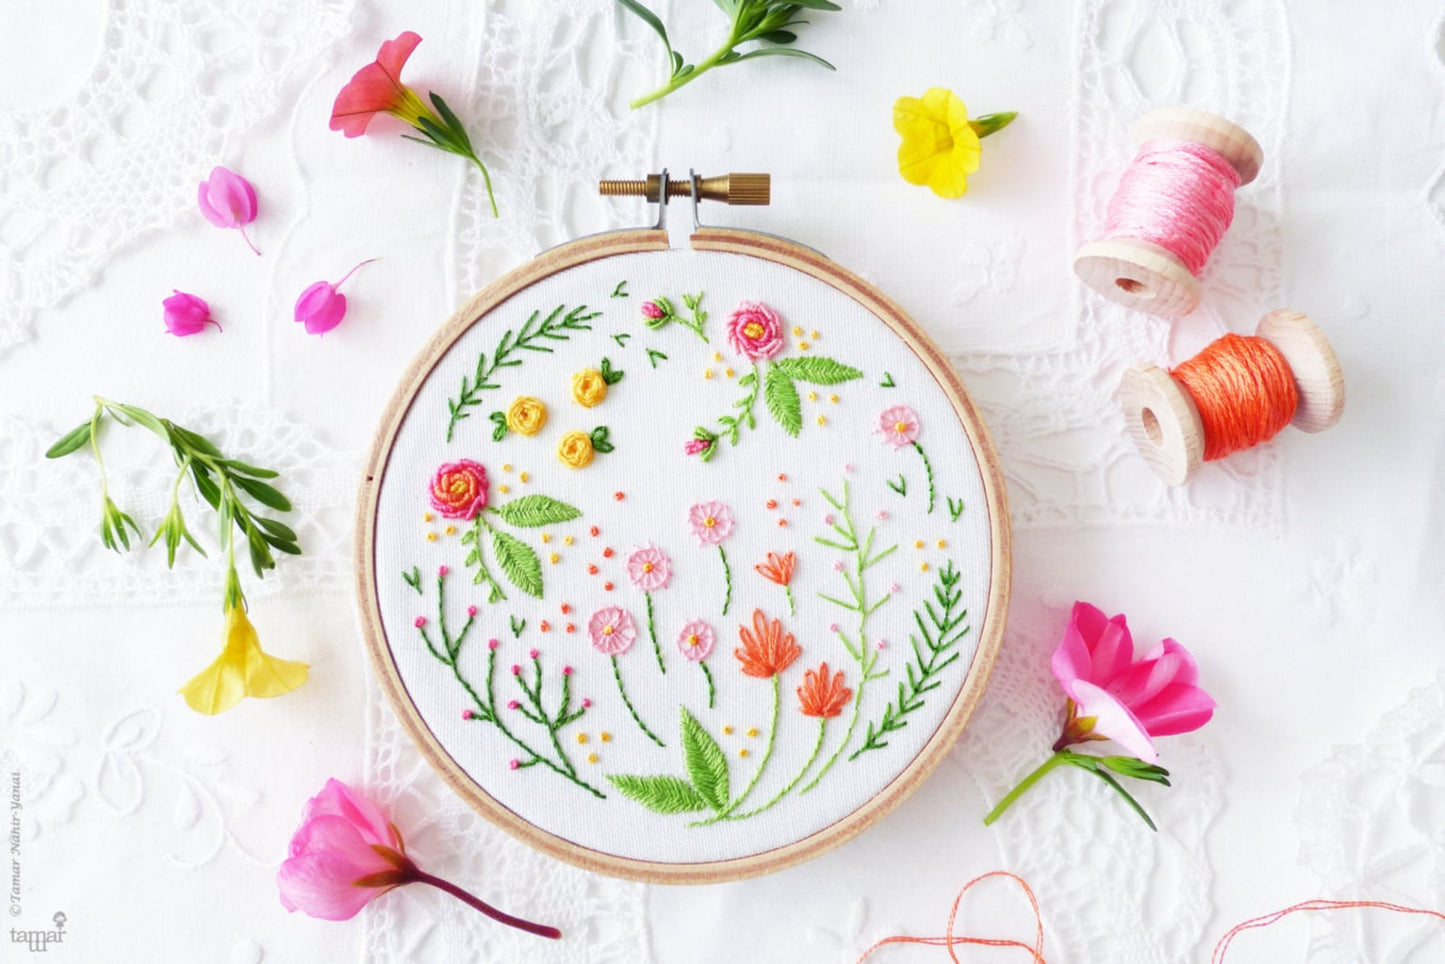 Happy Garden Embroidery Kit